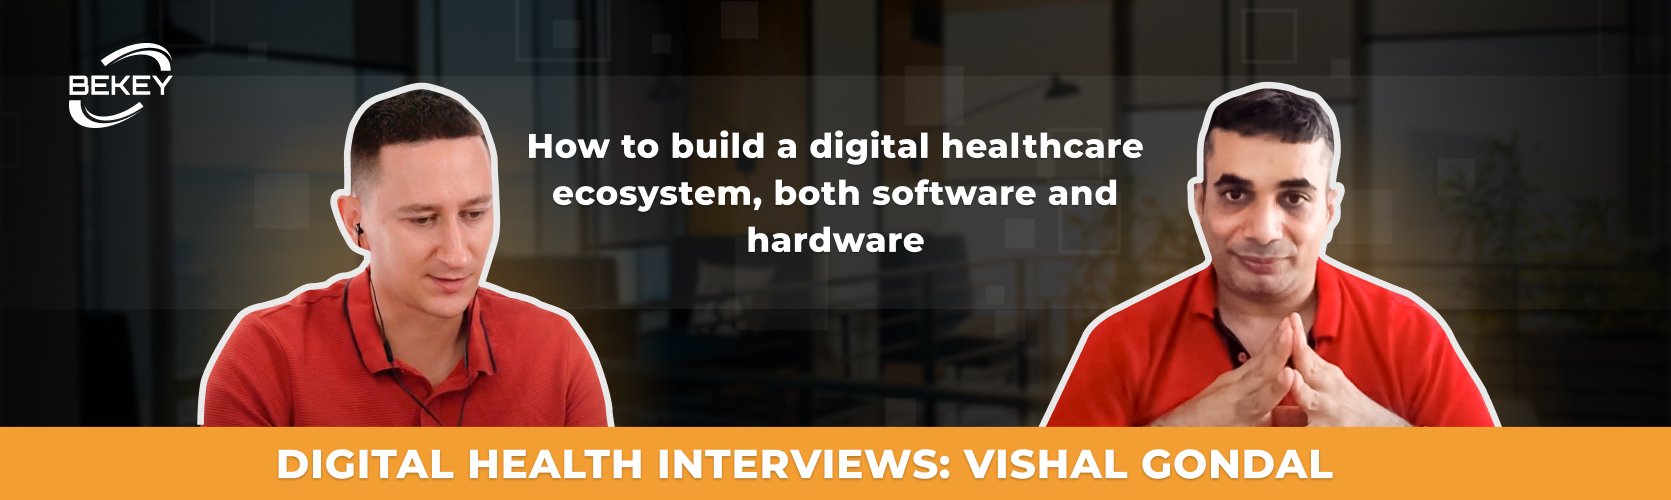 Digital Health Interviews - Vishal Gondal